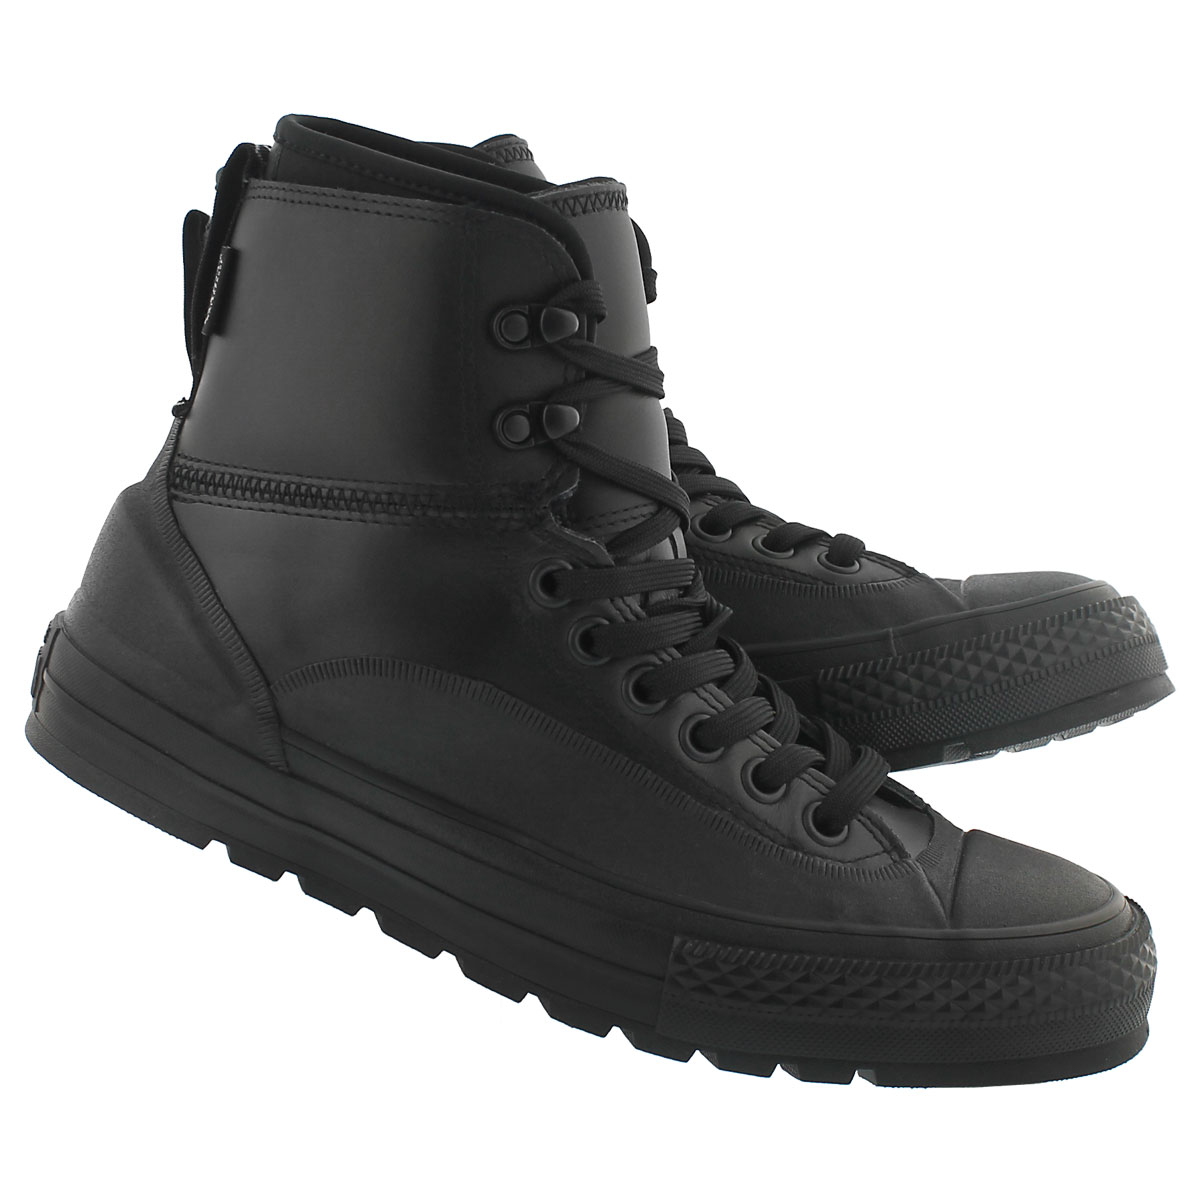 Converse Men's Chuck Taylor All Star Tekoa Leather Ankle Boot | eBay